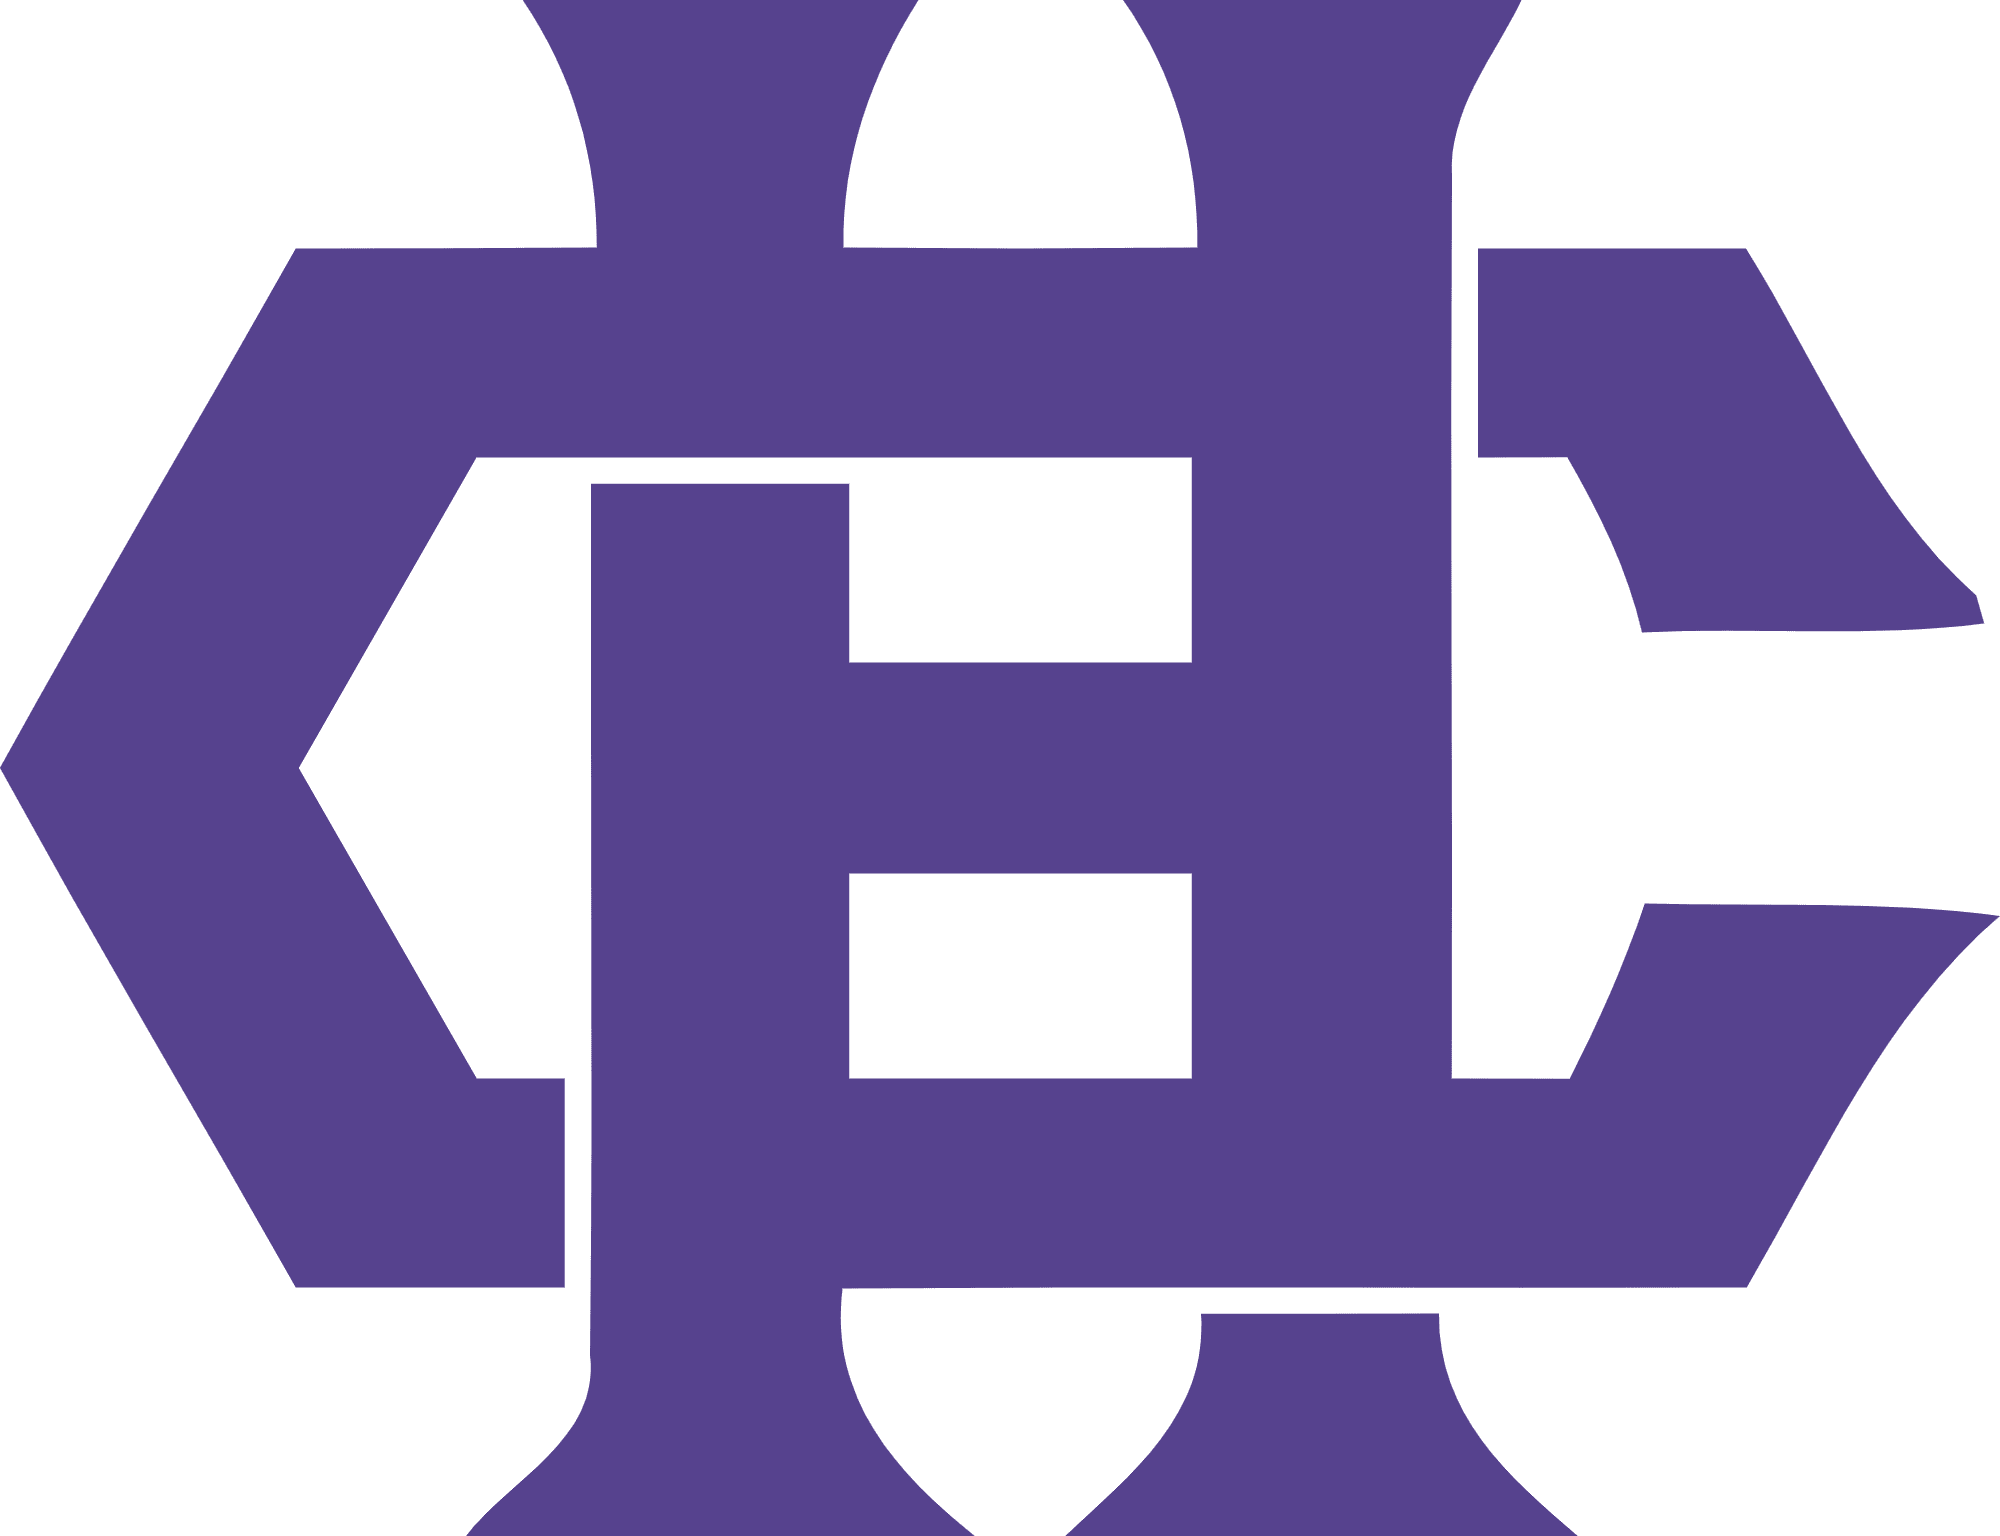 HyperCash logo in svg format